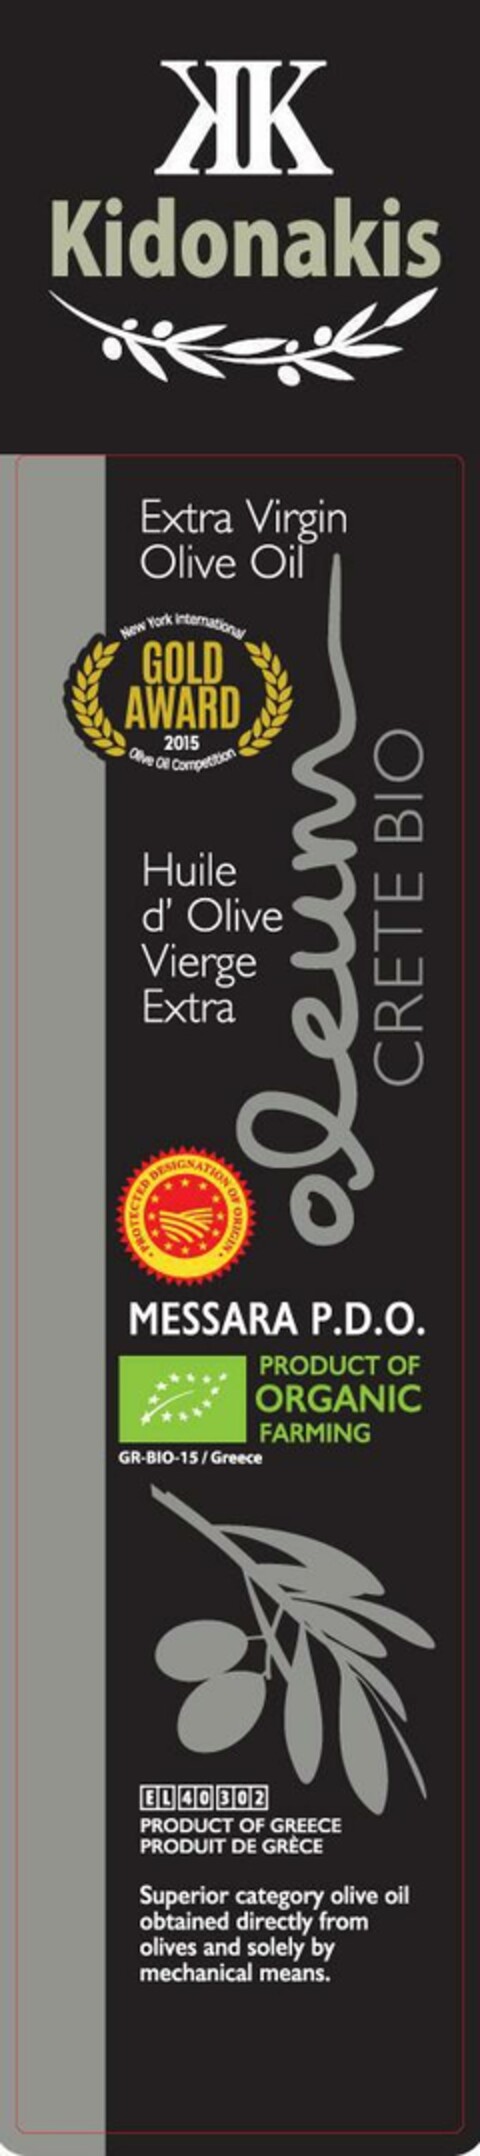 KK Kidonakis Extra Virgin Olive Oil Huile d' Olive Vierge Extra oleum CRETE BIO MESSARA P.D.O. Logo (EUIPO, 19.08.2015)